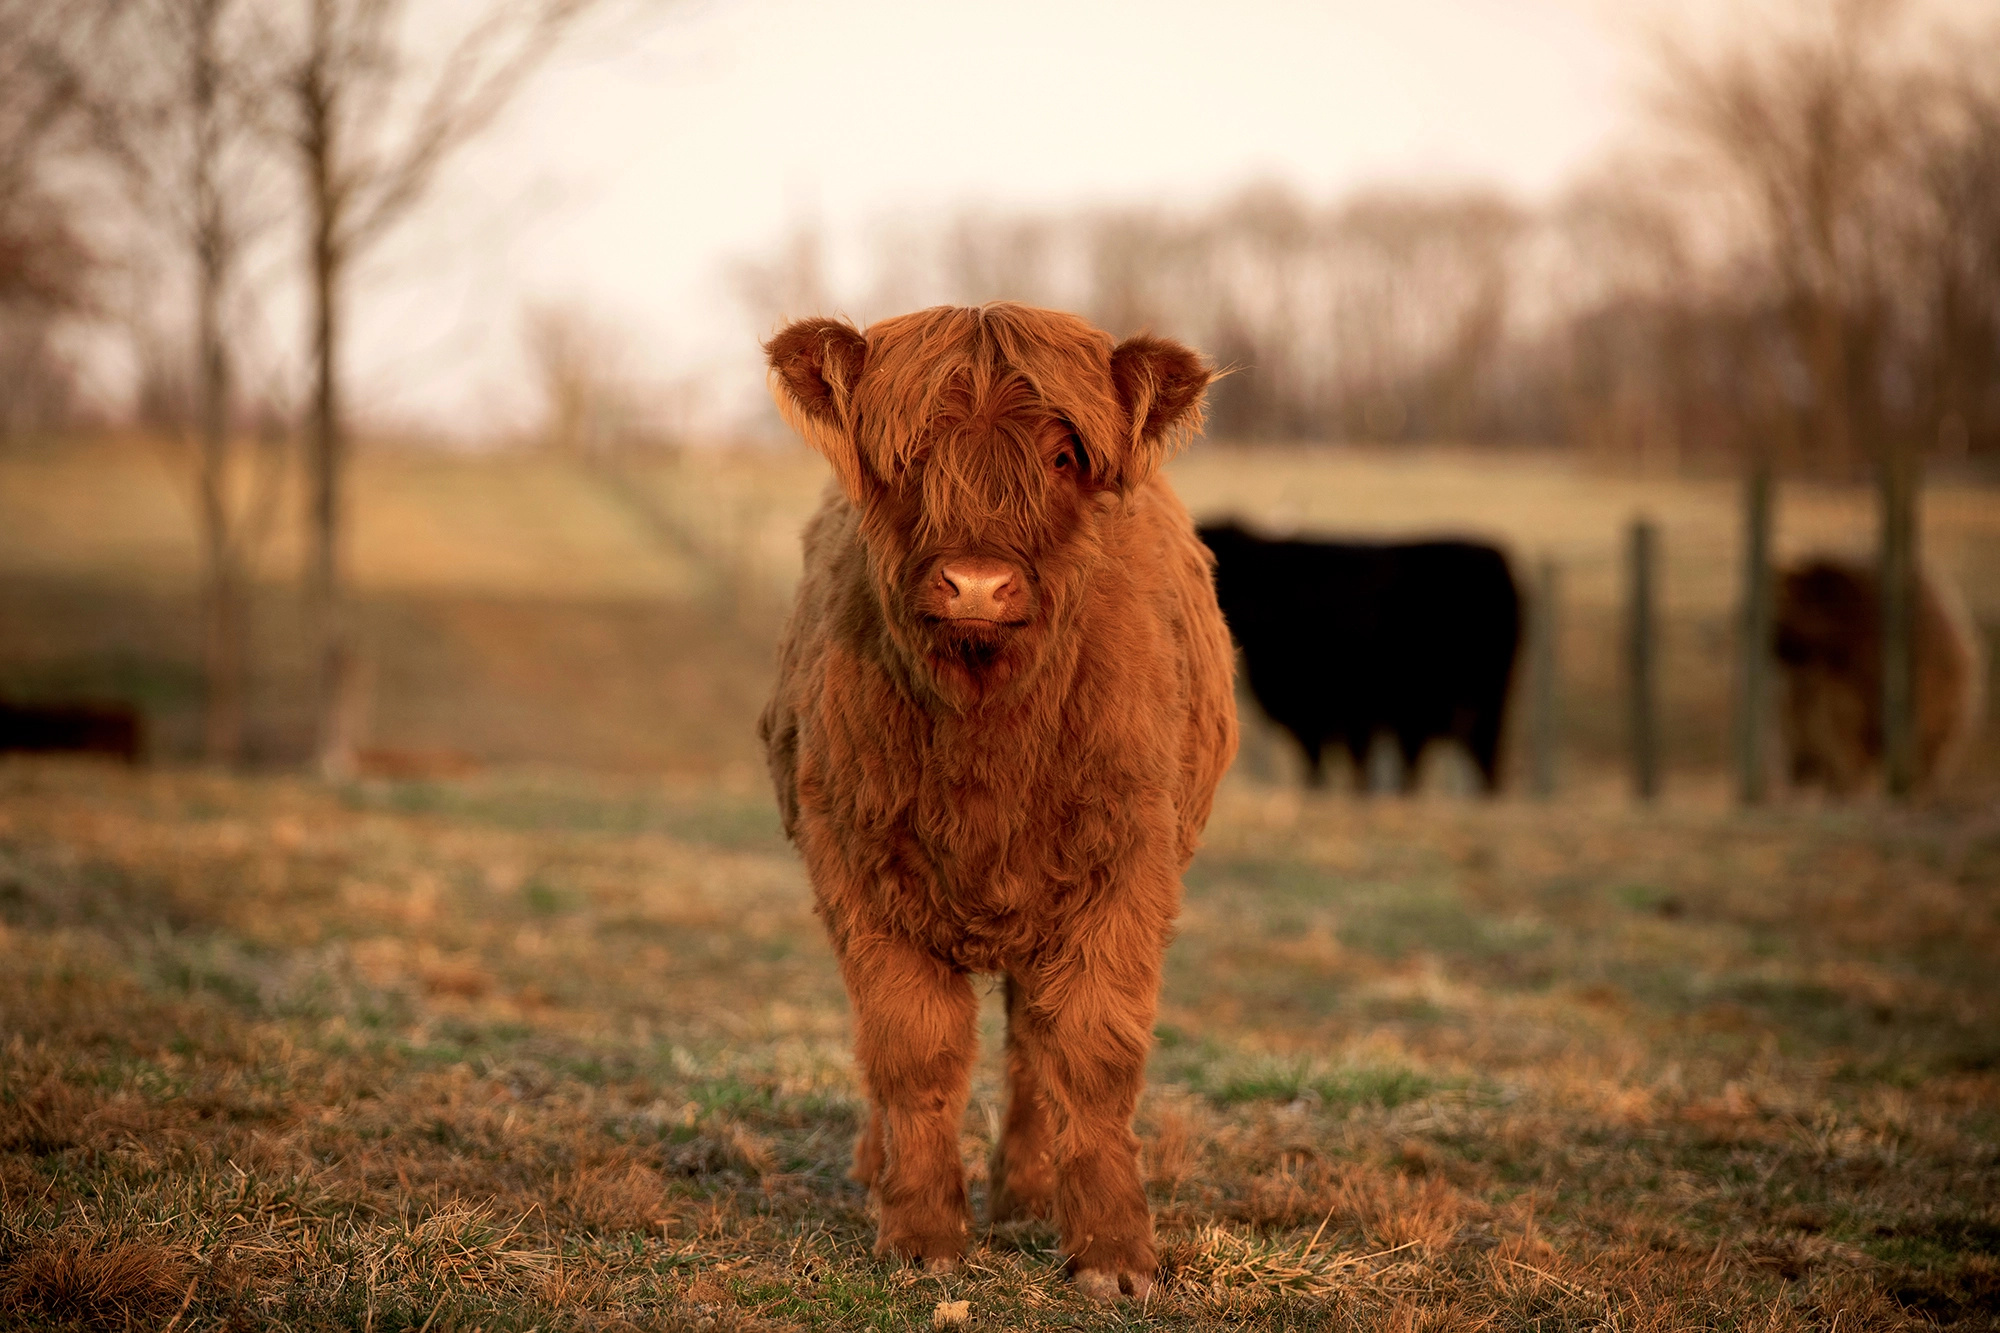 Adorable cow calves, Cuteness overload, Kentucky farm scenery, Farm animals in their habitat, 2000x1340 HD Desktop